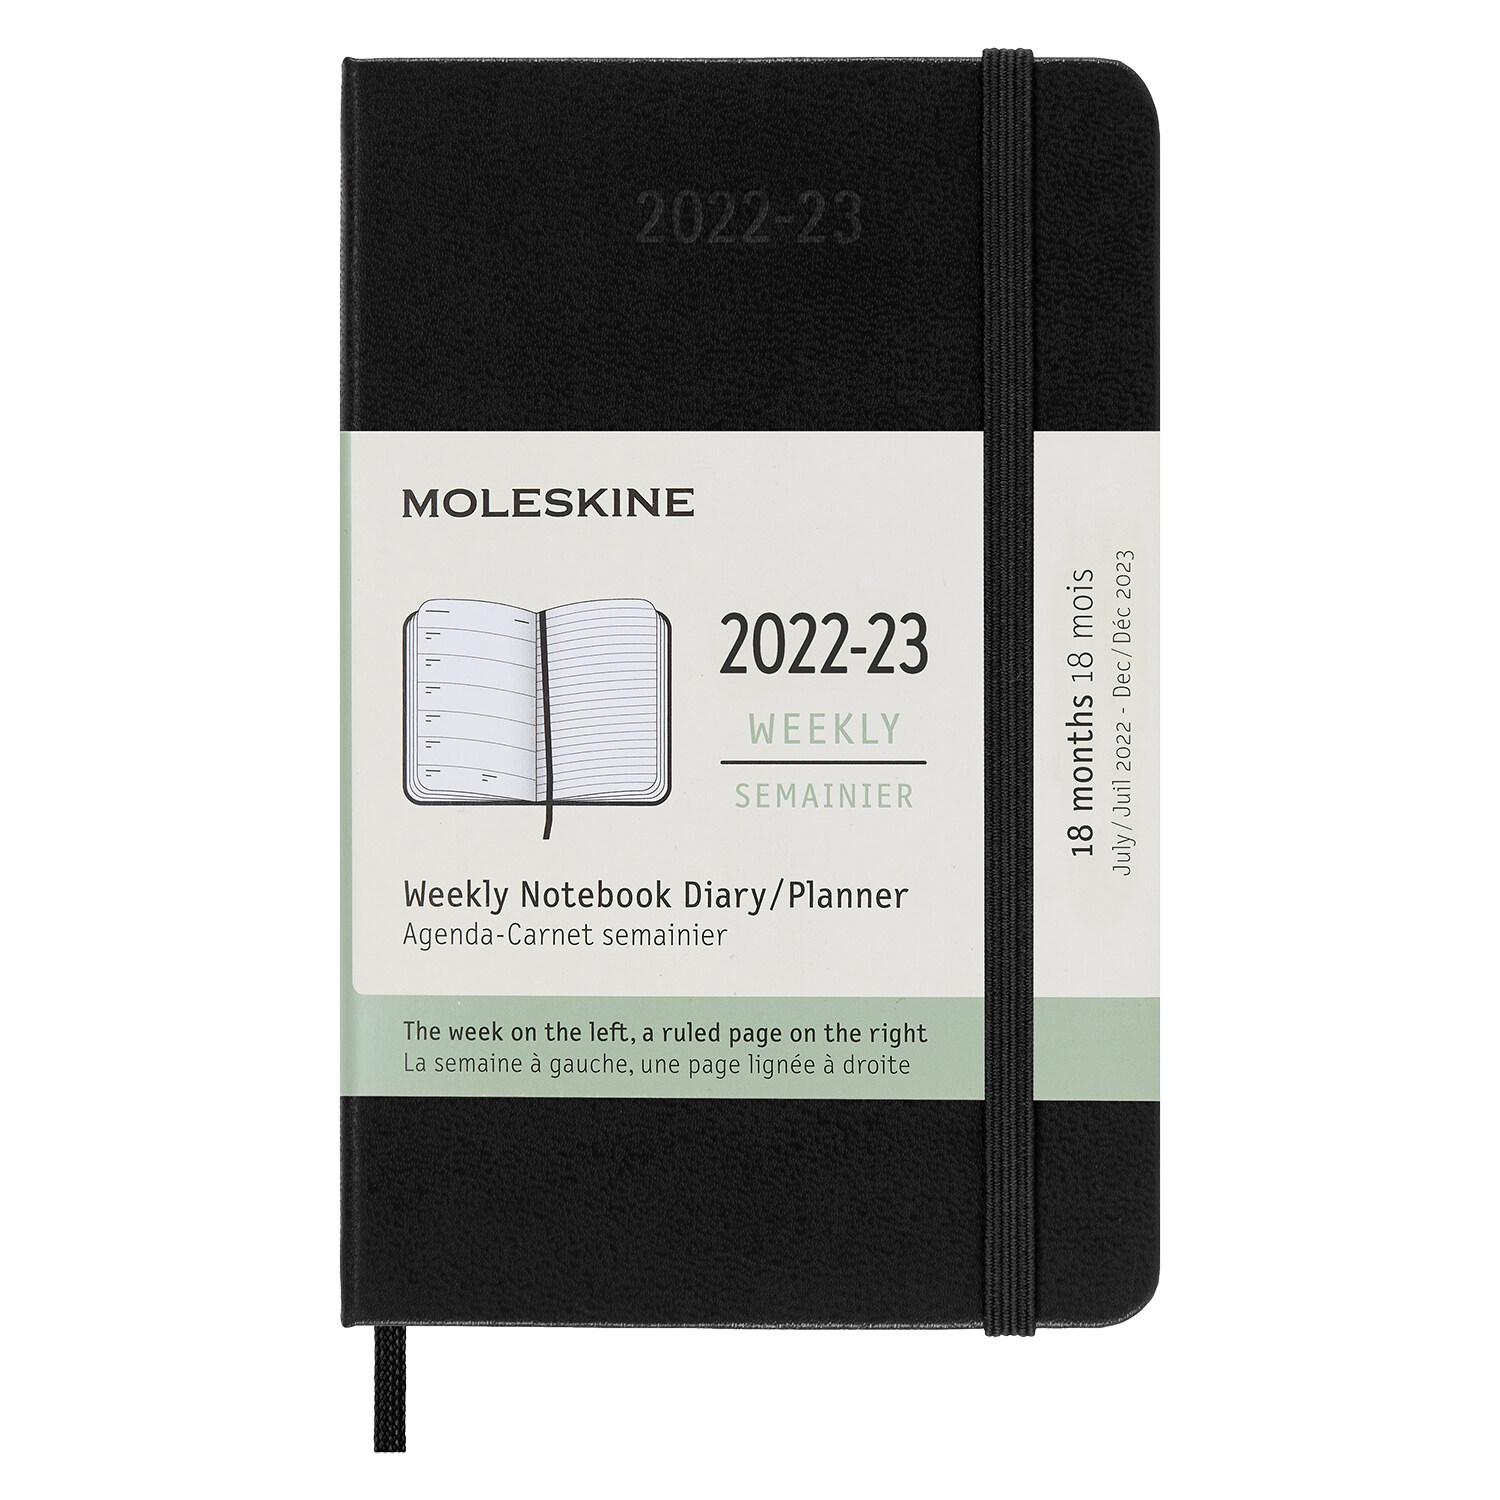 Moleskine 2023 Weekly Notebook Planner, 18m, Pocket, Black, Hard Cover (3.5 X 5.5) (Other)